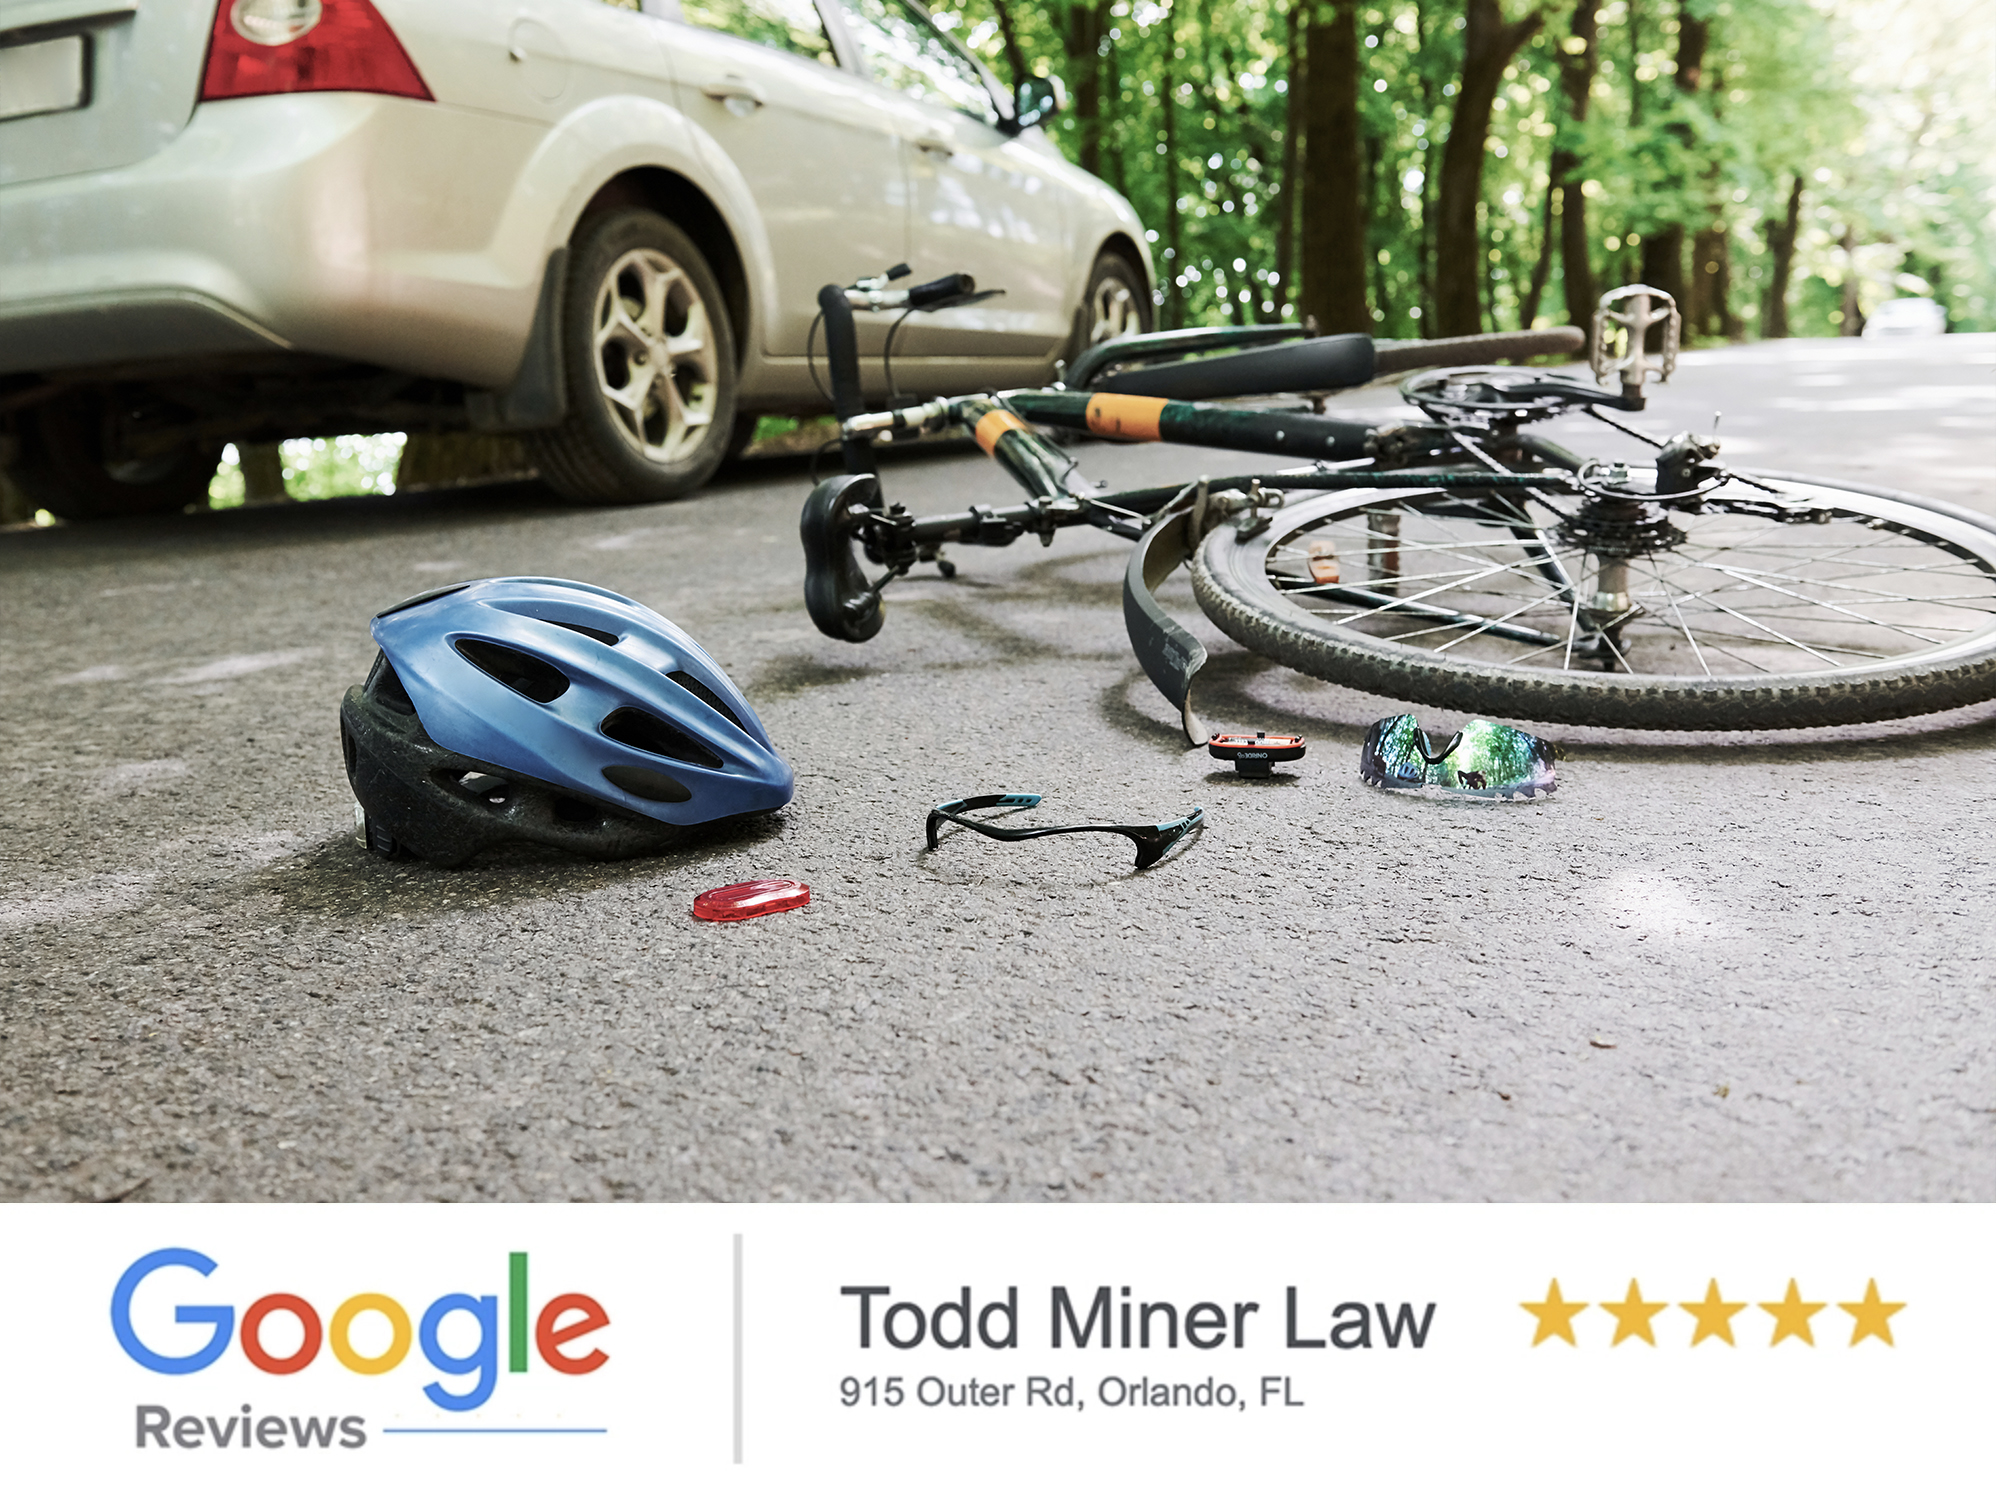 Google Reviews 5 stars Todd Miner Orlando Bicycle Attorney